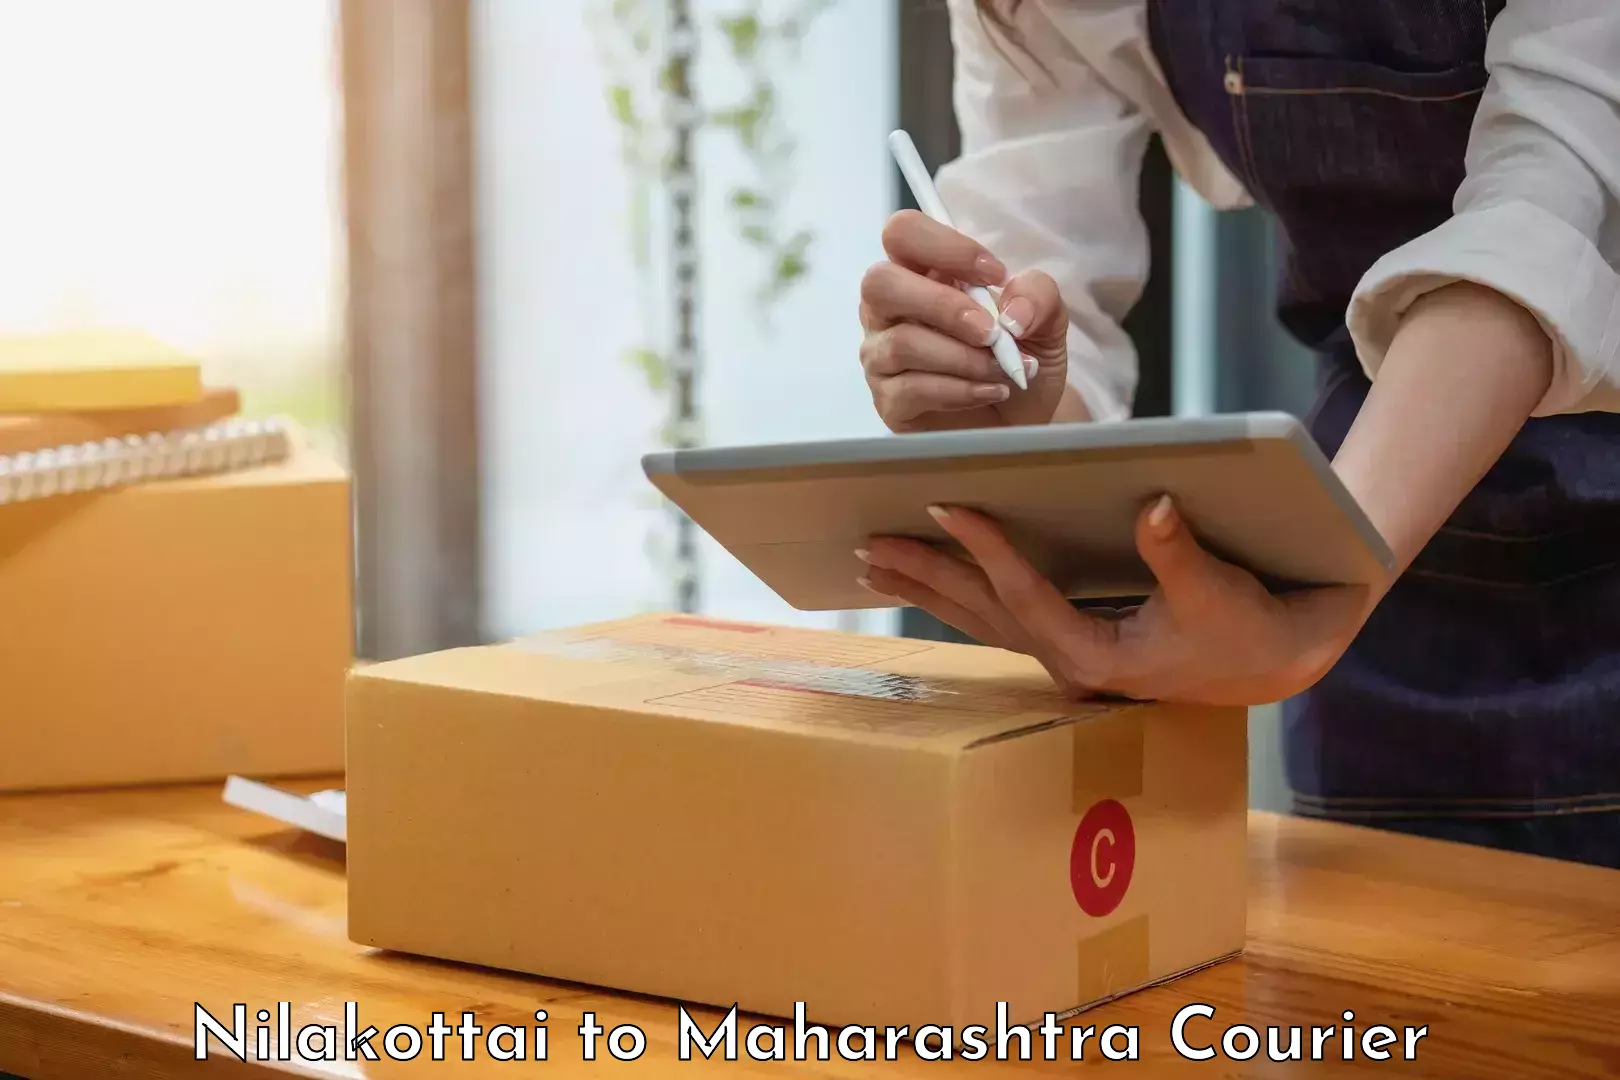 Digital courier platforms Nilakottai to Ratnagiri